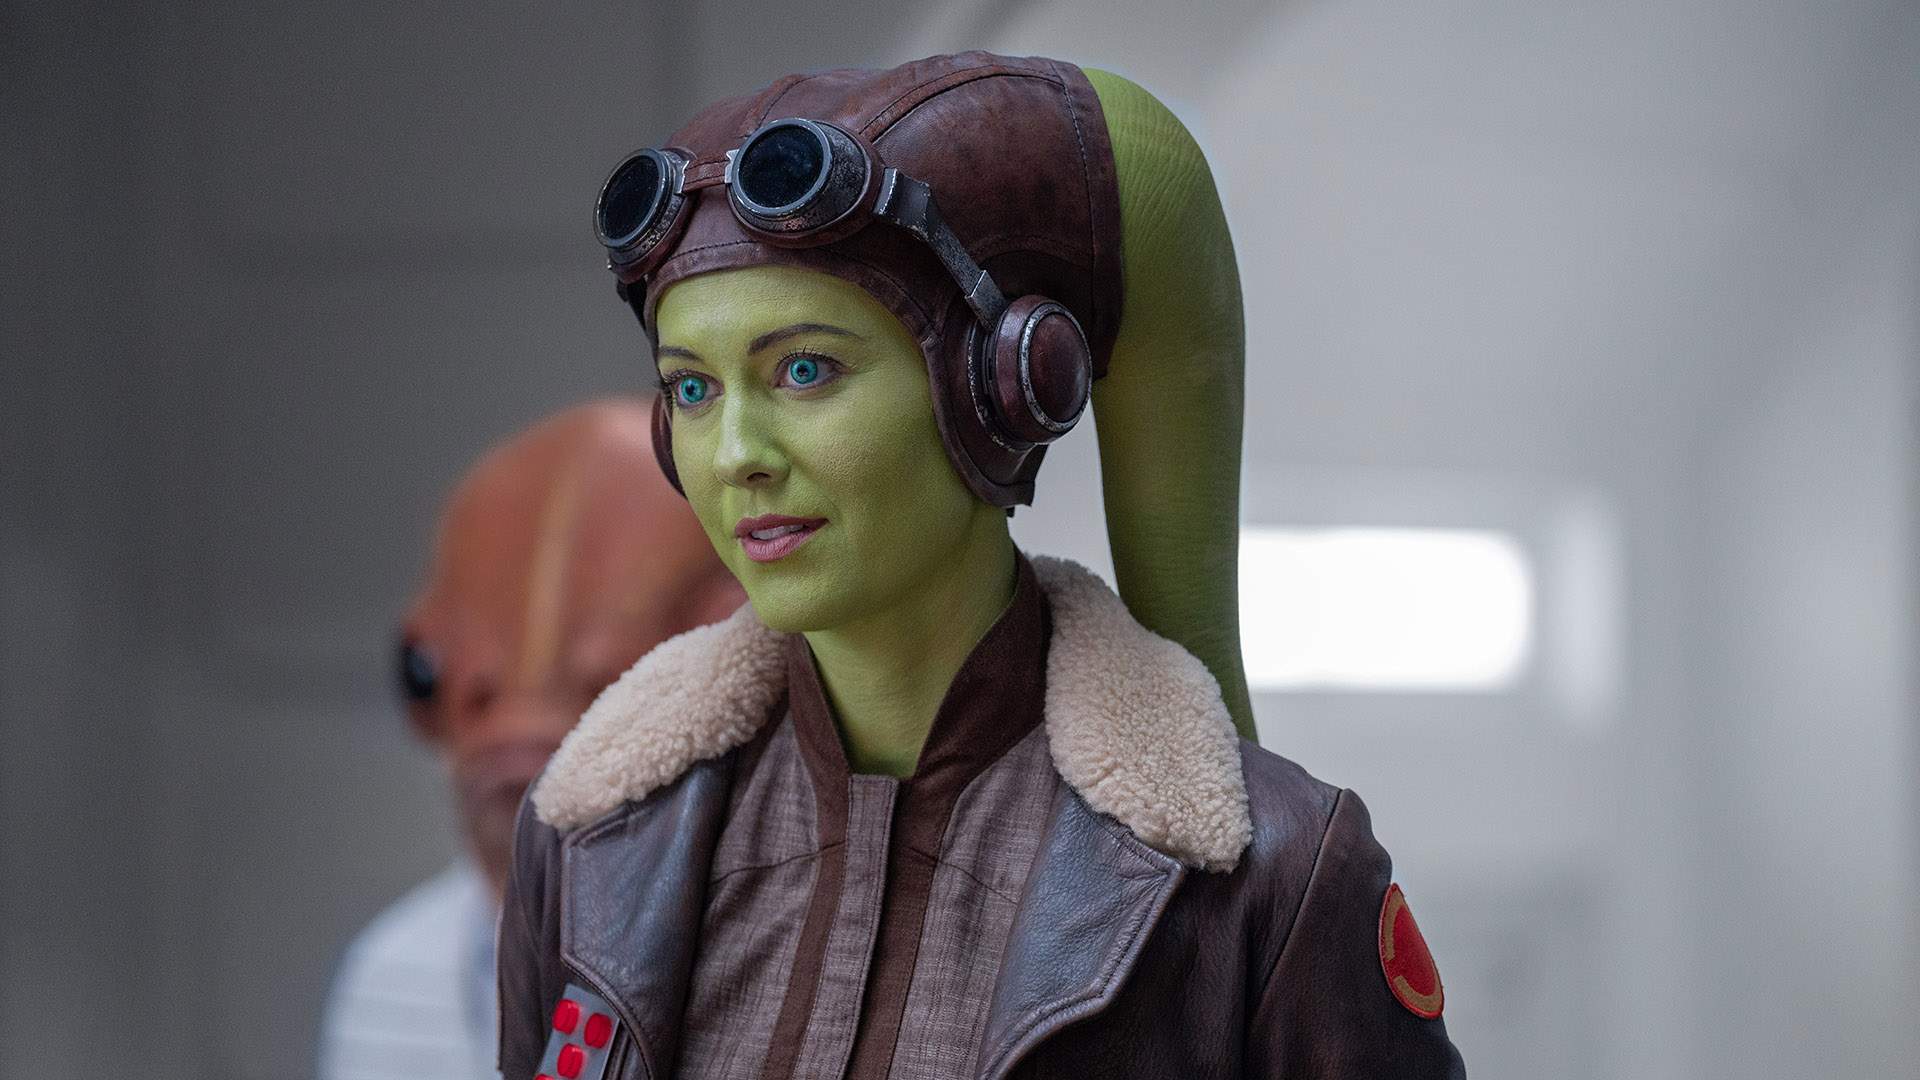 "Once a Rebel, Always a Rebel": The Full Trailer for New 'Star Wars' Series 'Ahsoka' Is Here